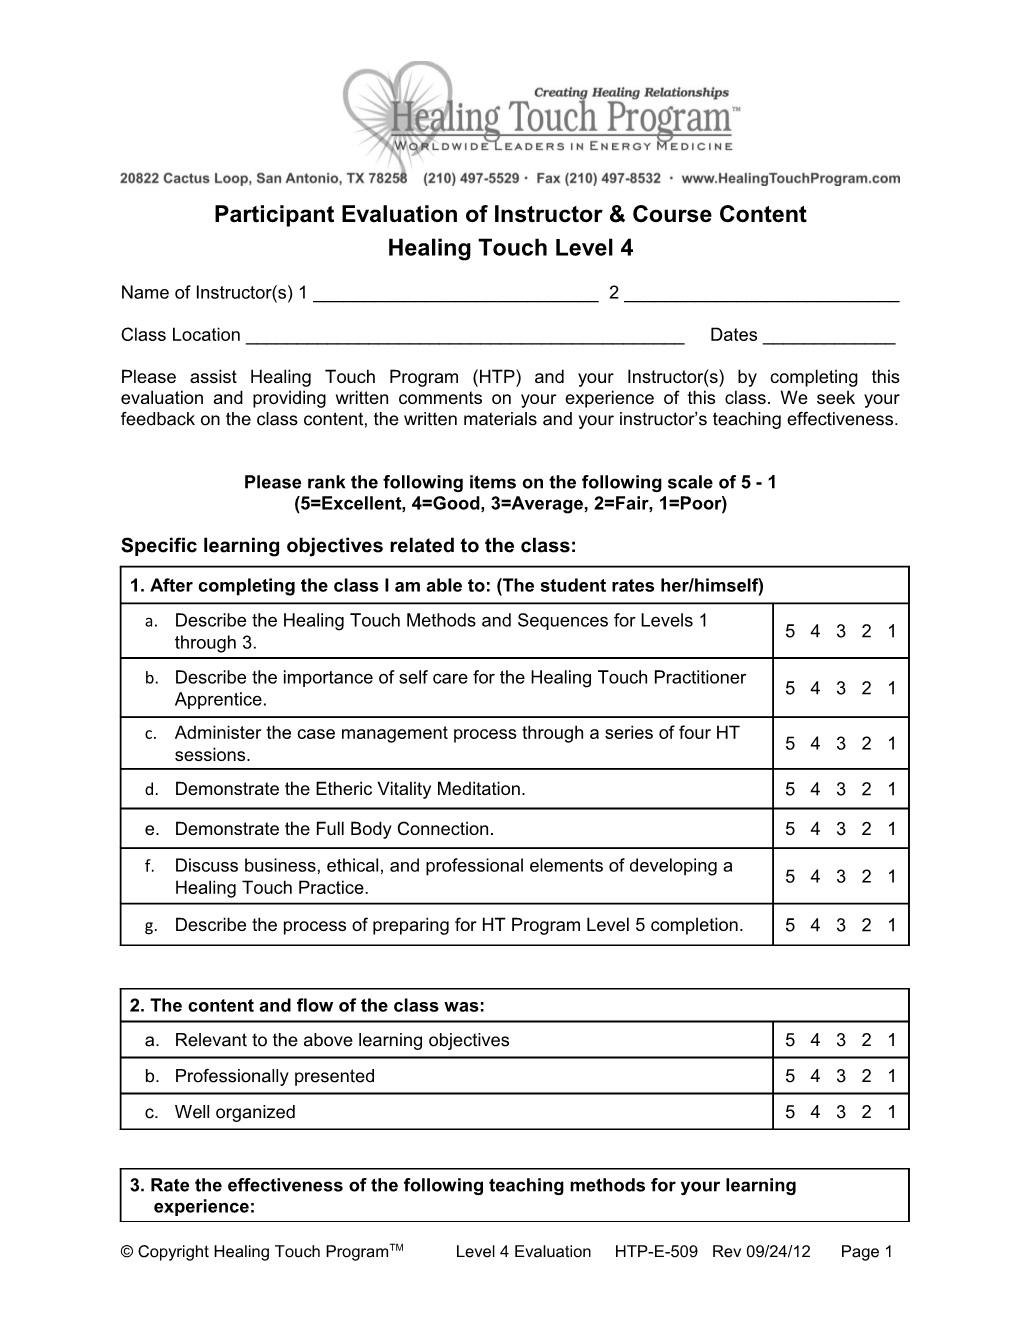 Participant Evaluation of Instructor & Course Content